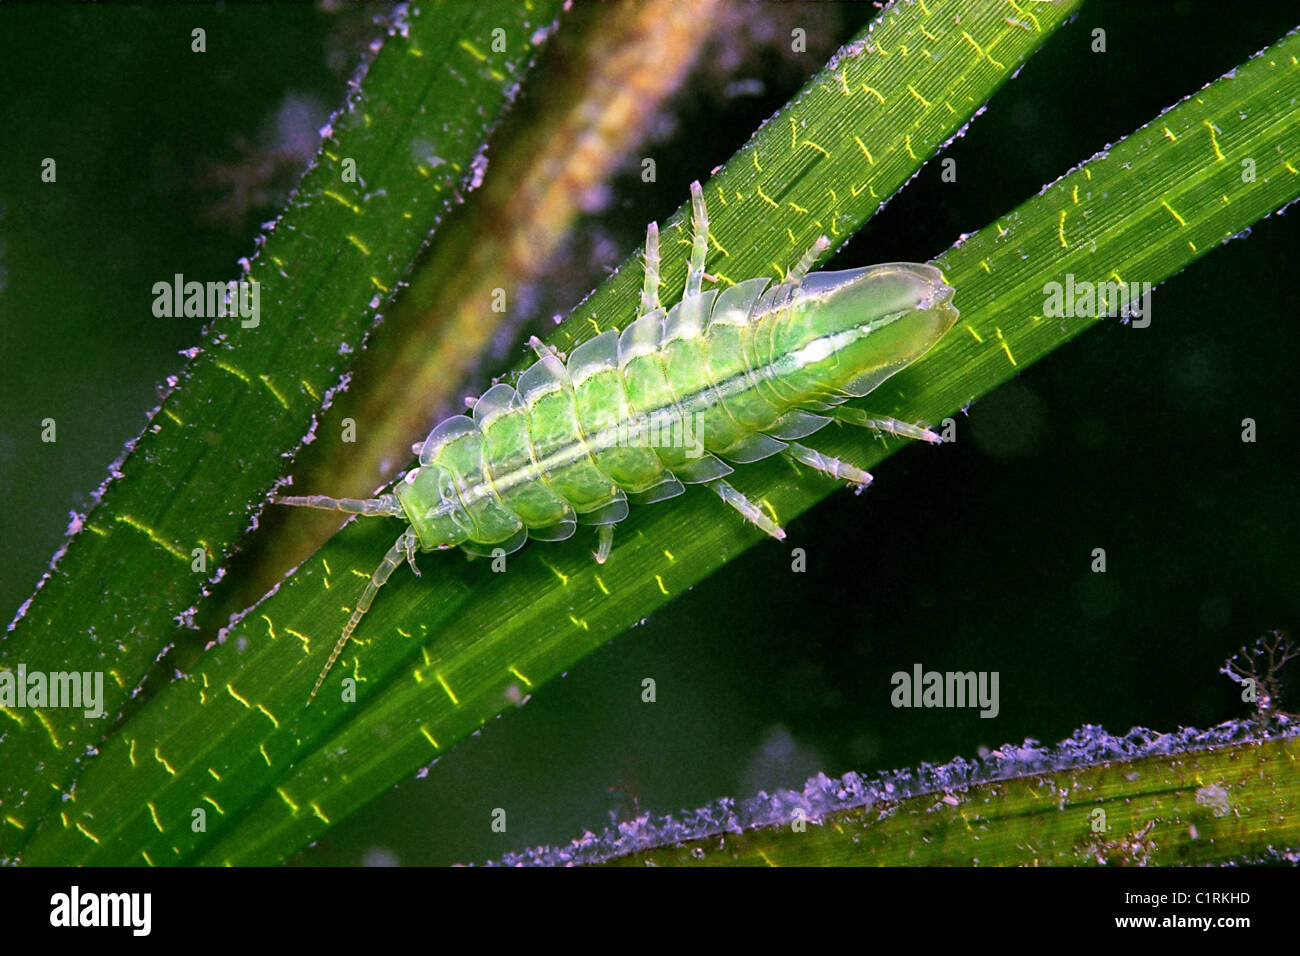 Baltic Isopod (Idotea baltica) on Grasswrack (Zostera marina), Black sea, Ukraine Stock Photo